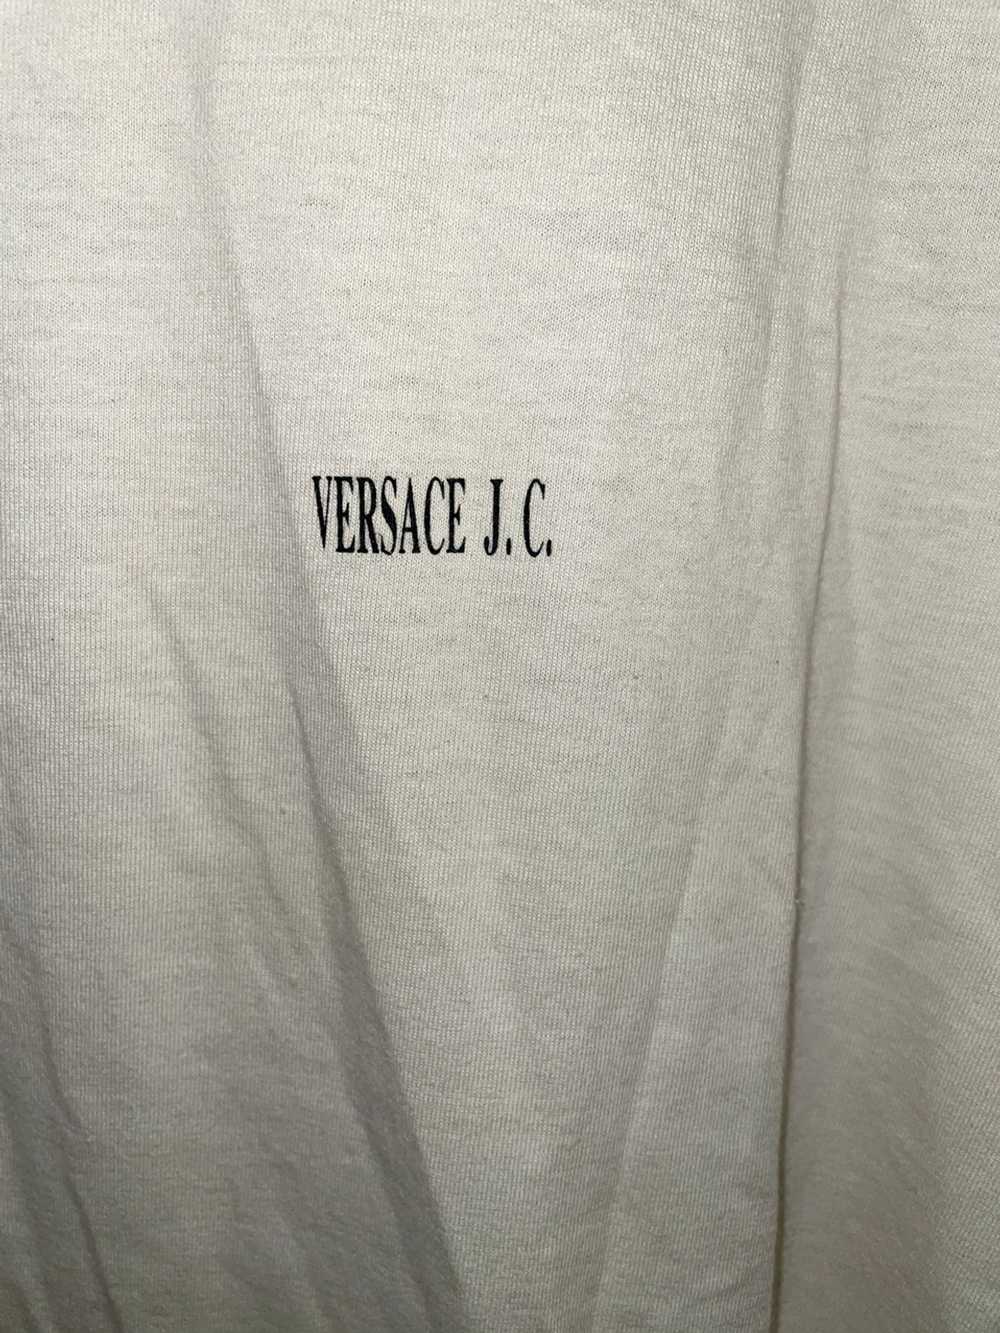 Versace Jeans Couture Versace jeans logo T shirt - image 2